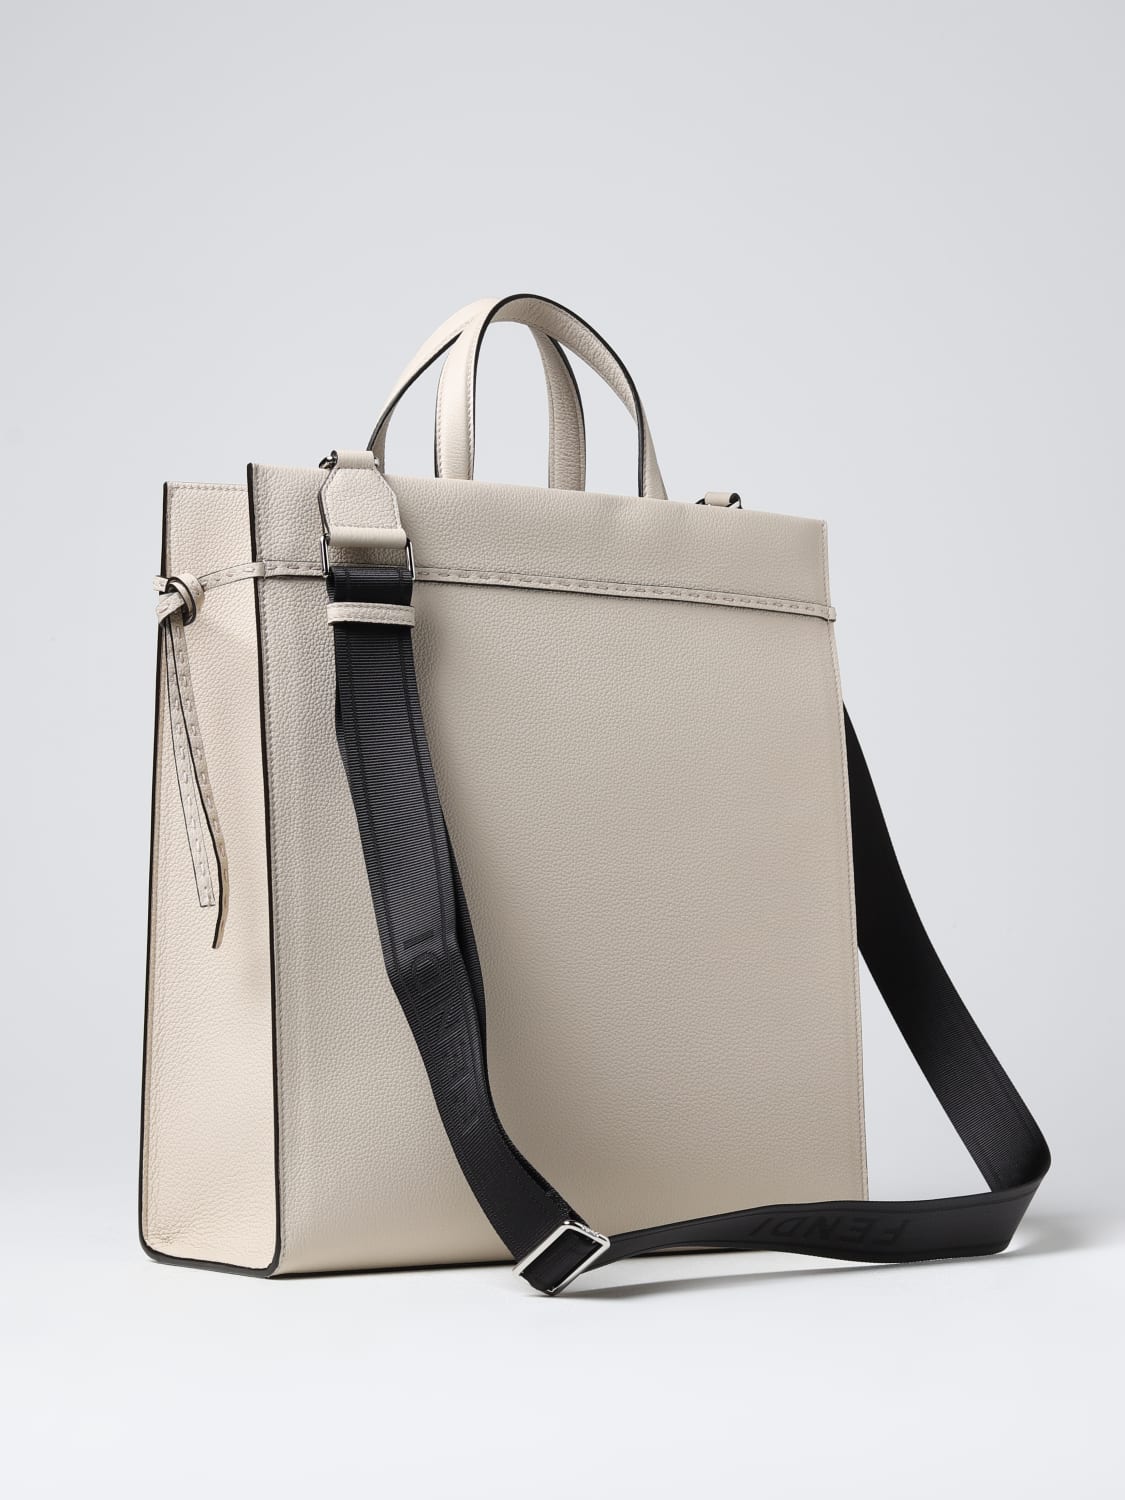 FENDI: Fendii Go To Shopper bag in grained leather - White | Fendi bags ...